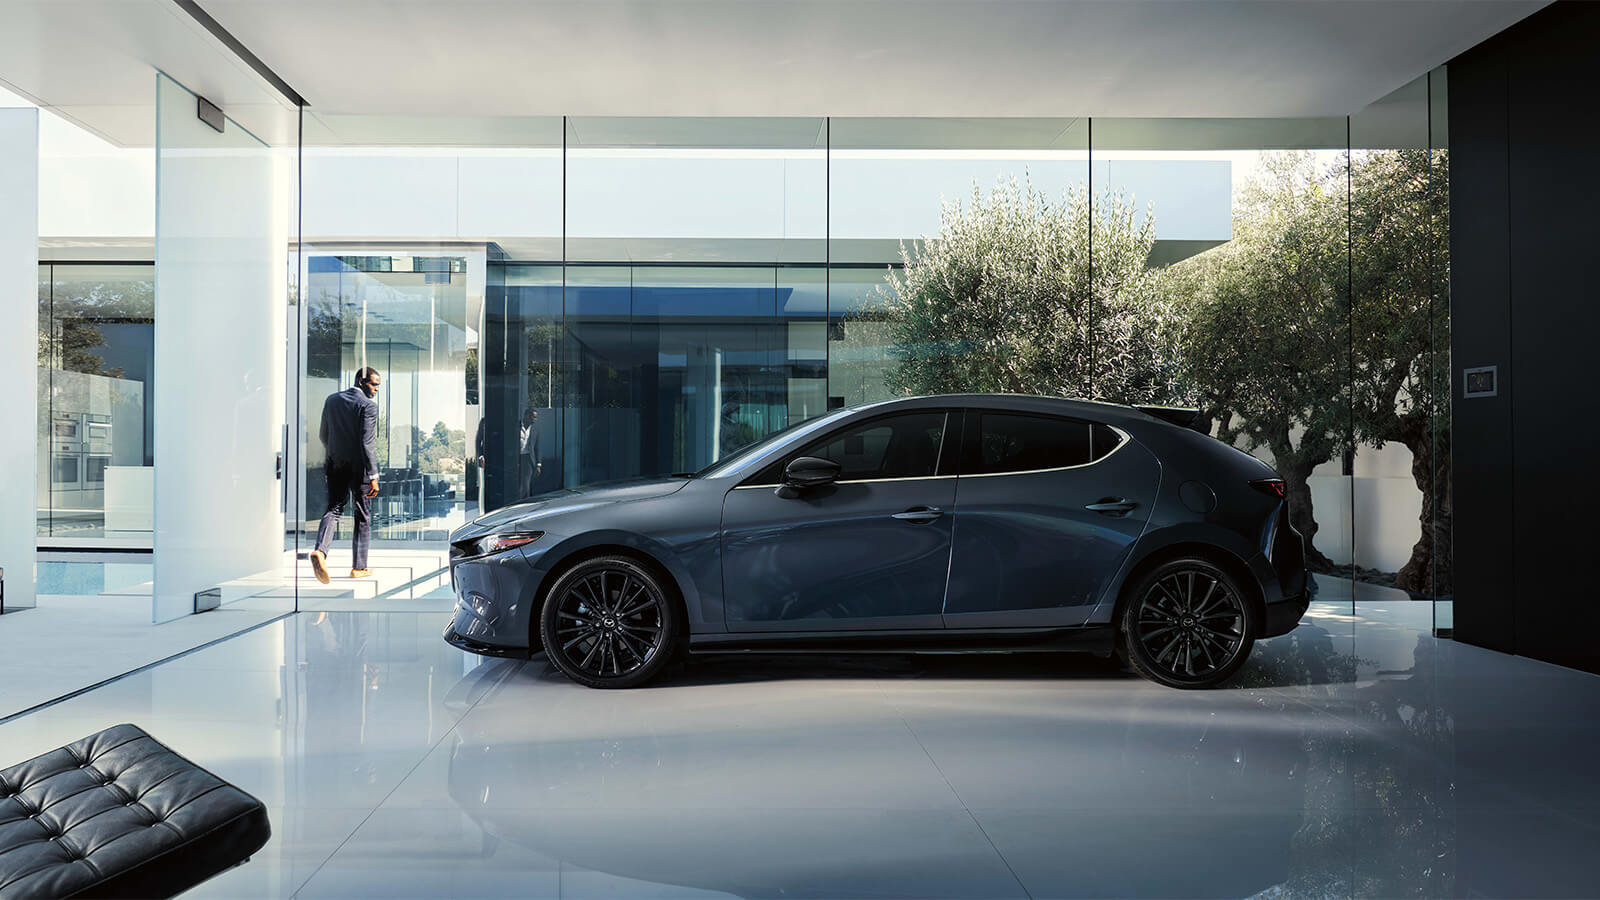 Polymetal Grey Mazda3 Sport hatchback is parked in a glass surround garage. 